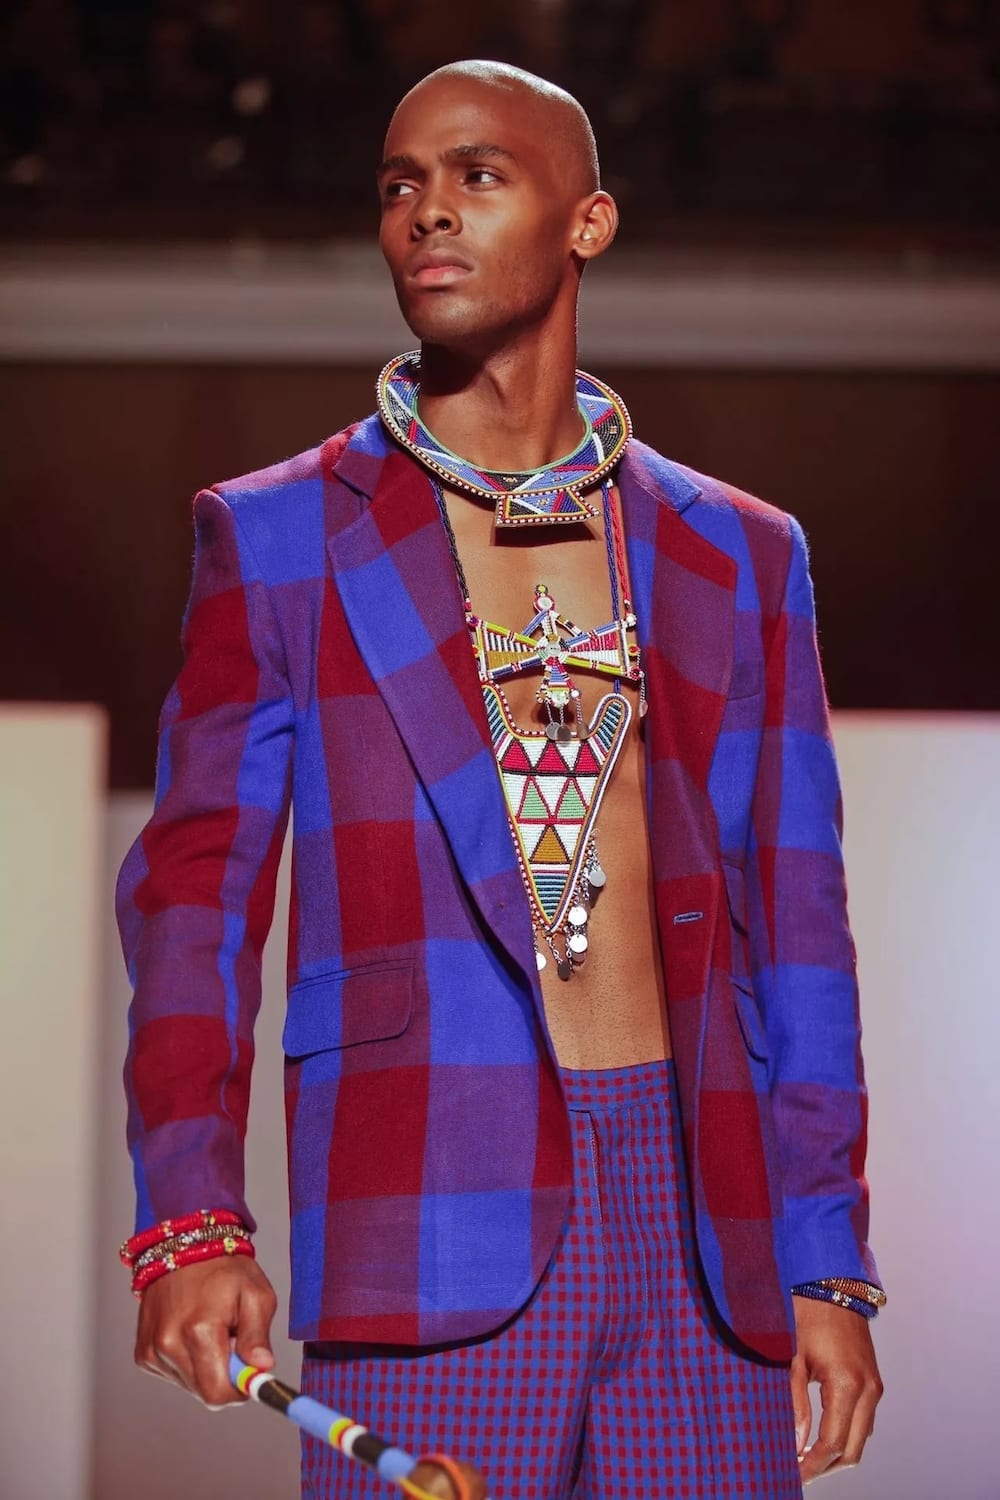 kenyan african wear styles for men
african wear pics for men
male african wear designs photos